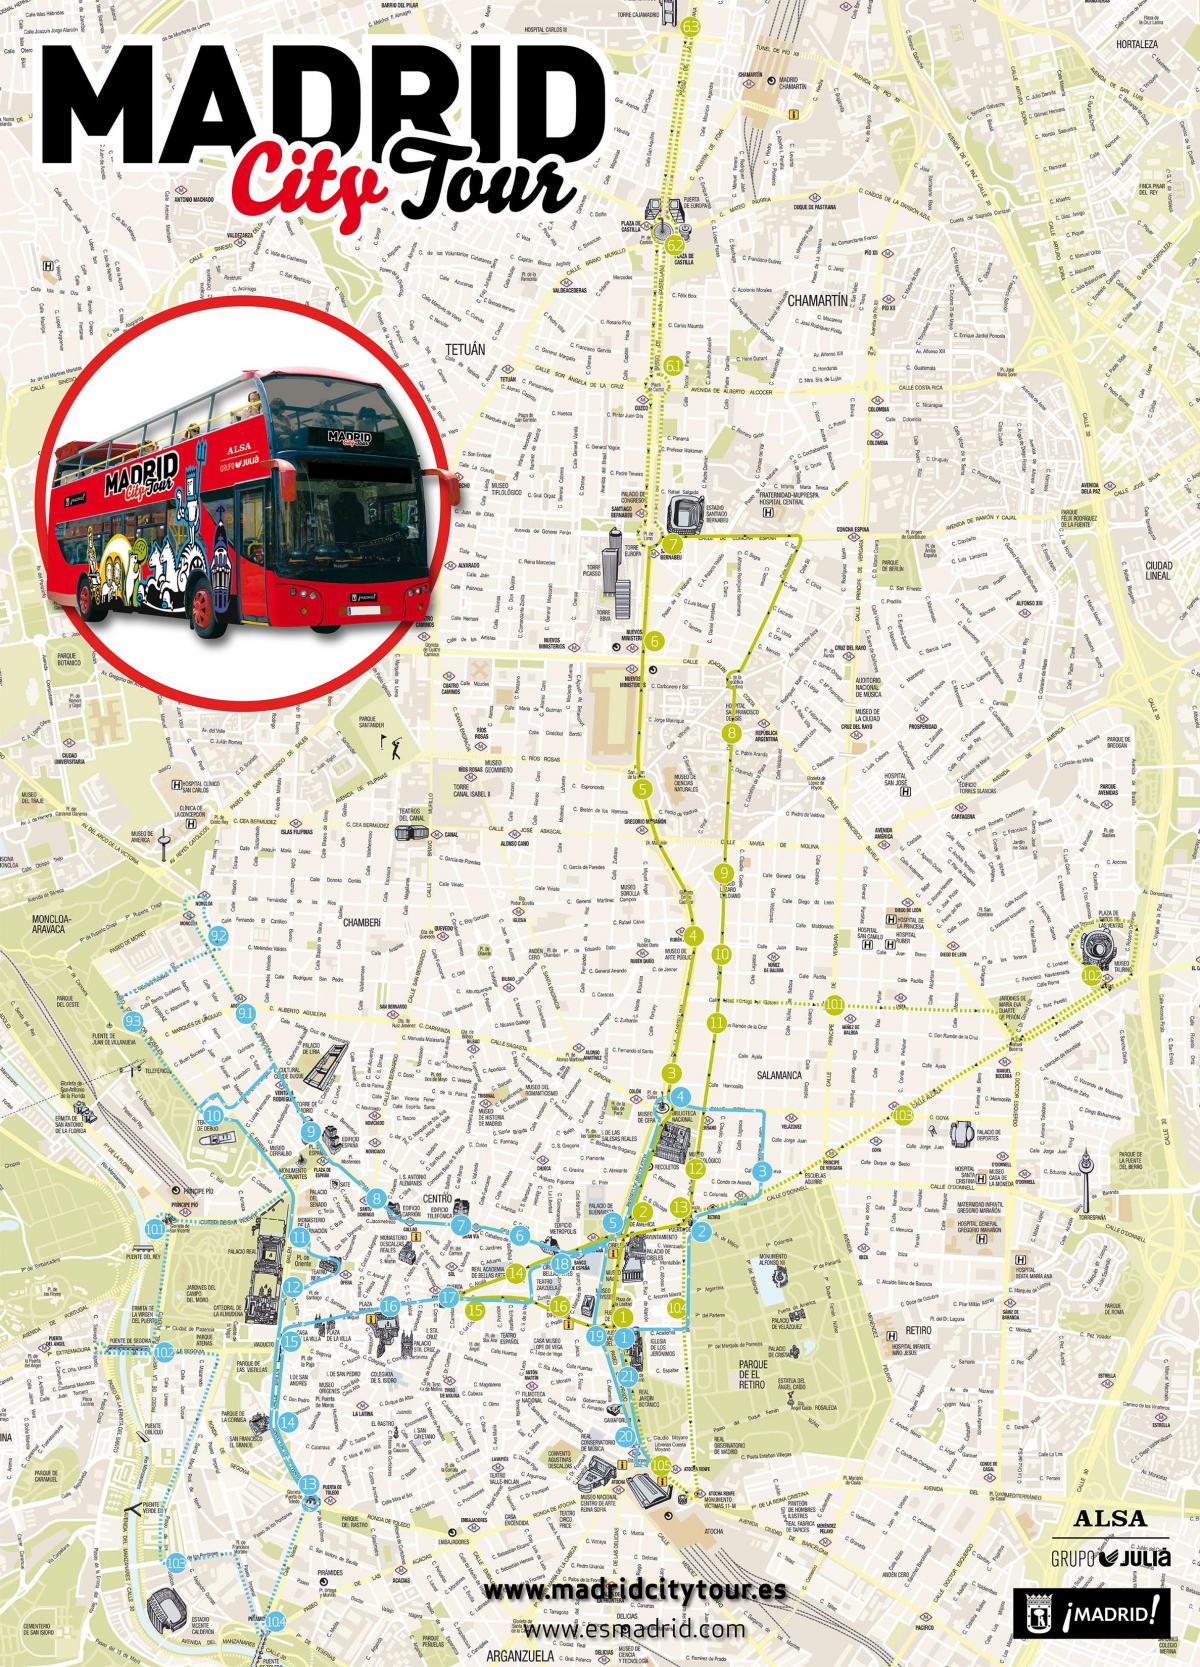 Madrid şehir otobüs turu göster